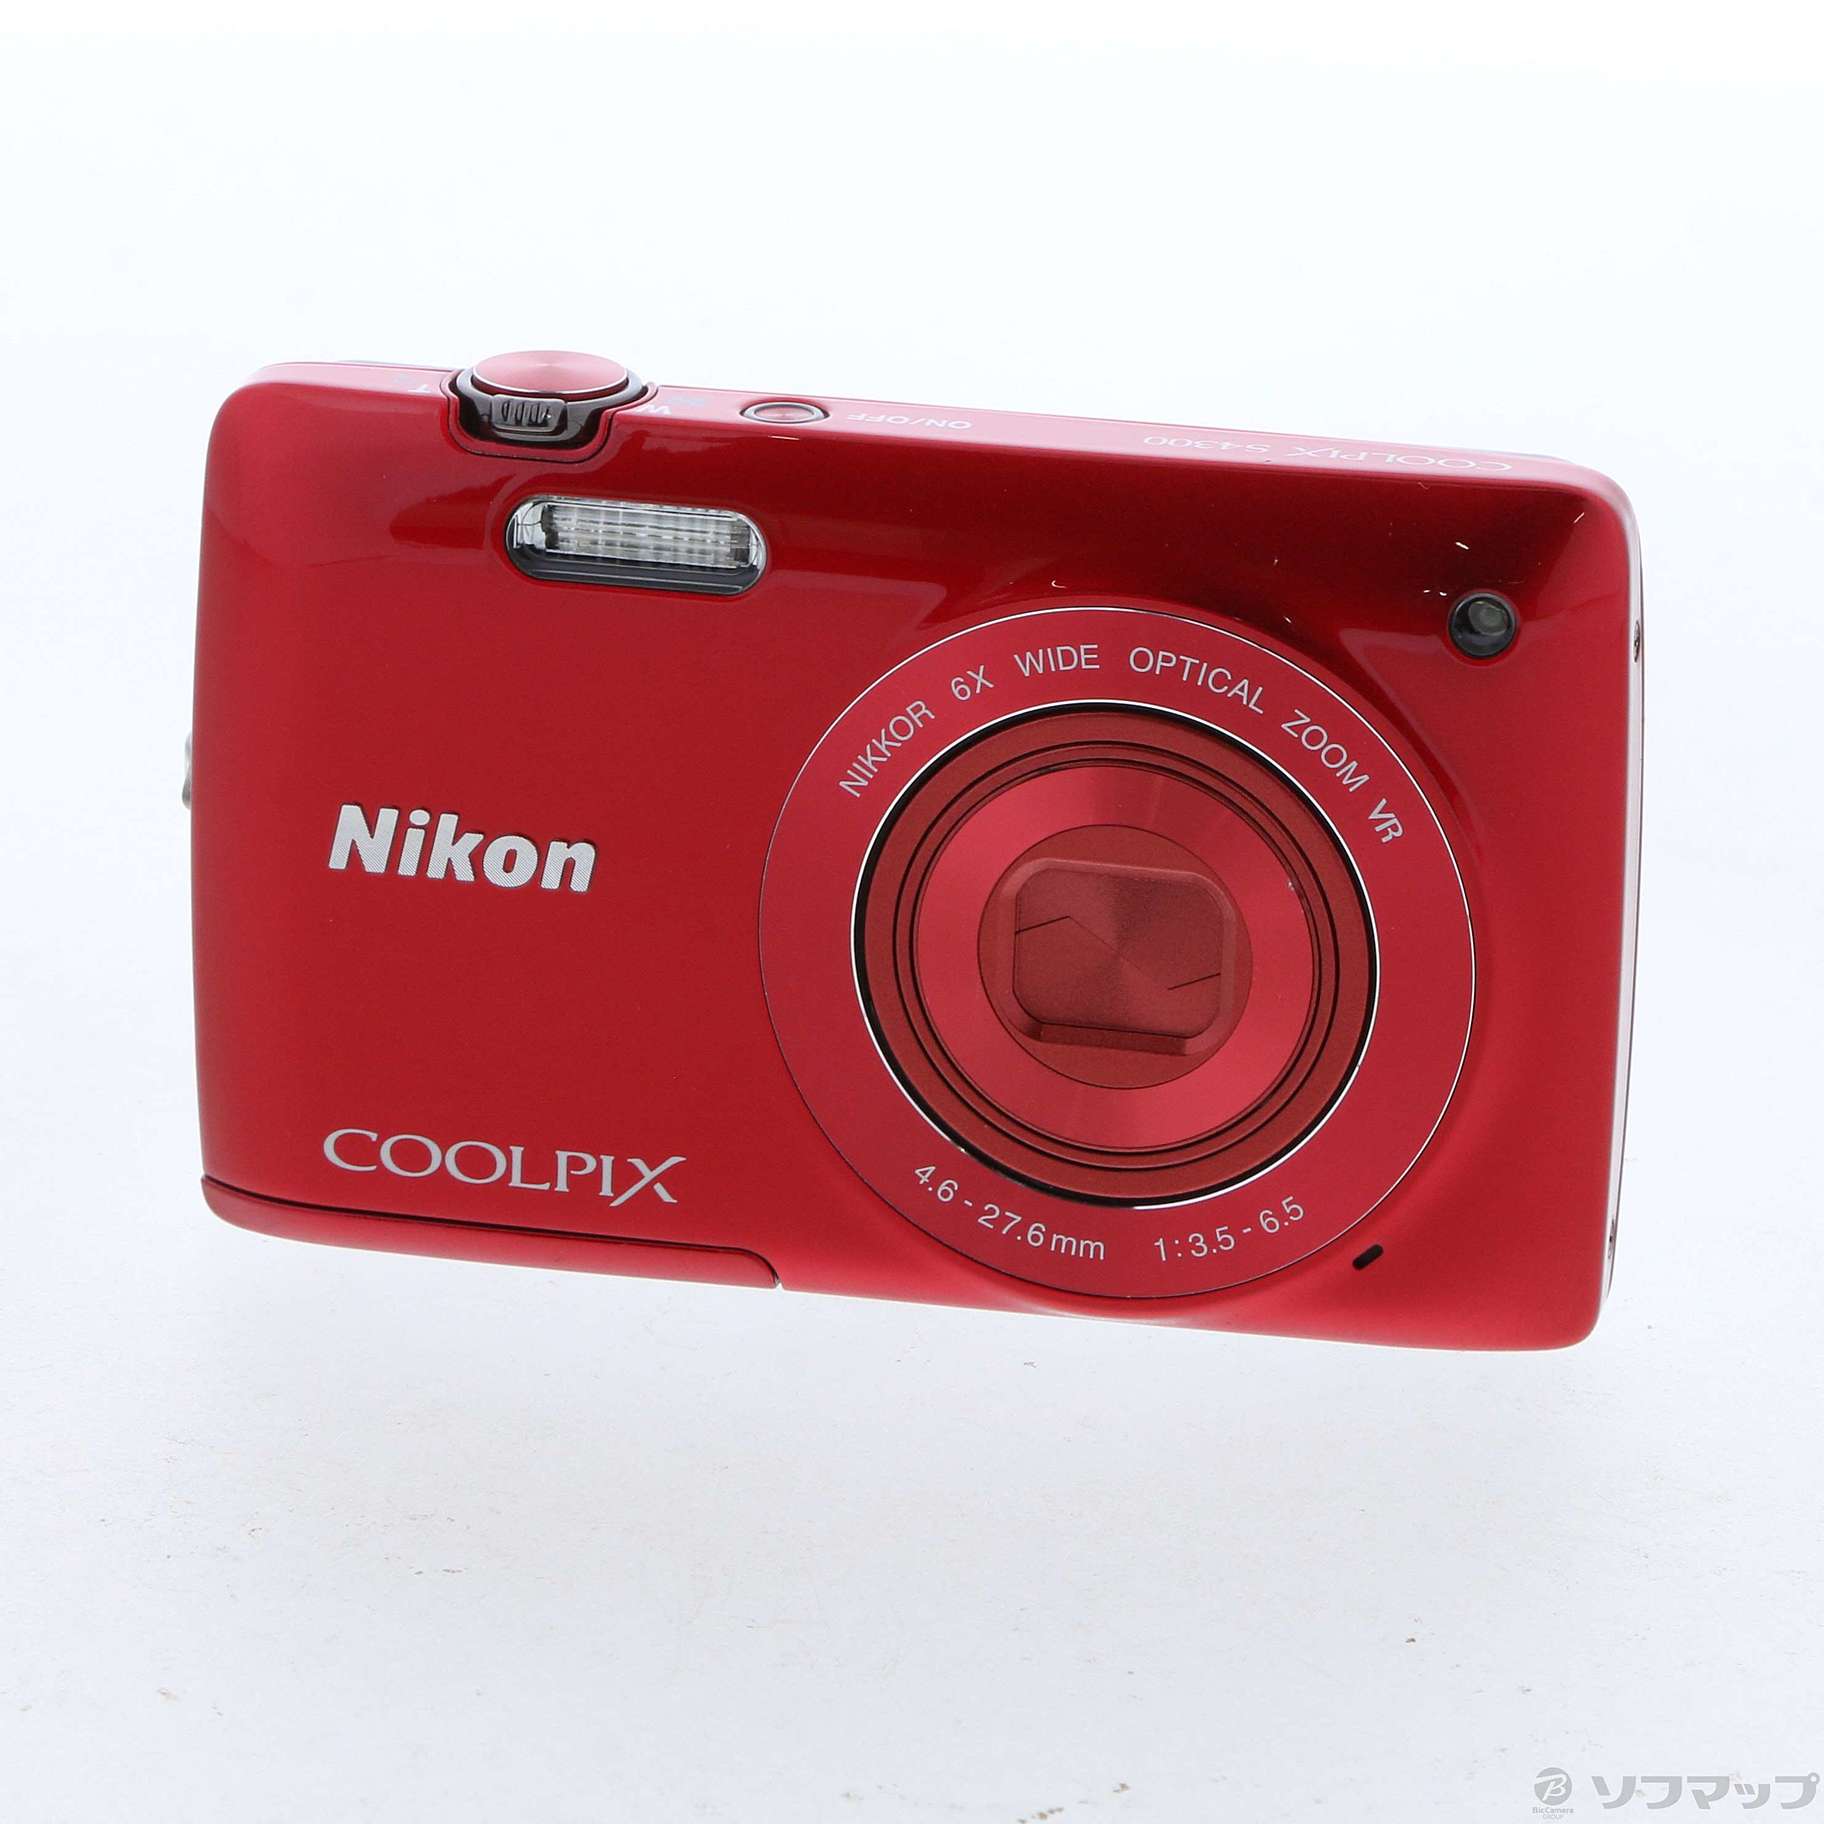 Nikon ニコン coolpix s4300 - デジタルカメラ